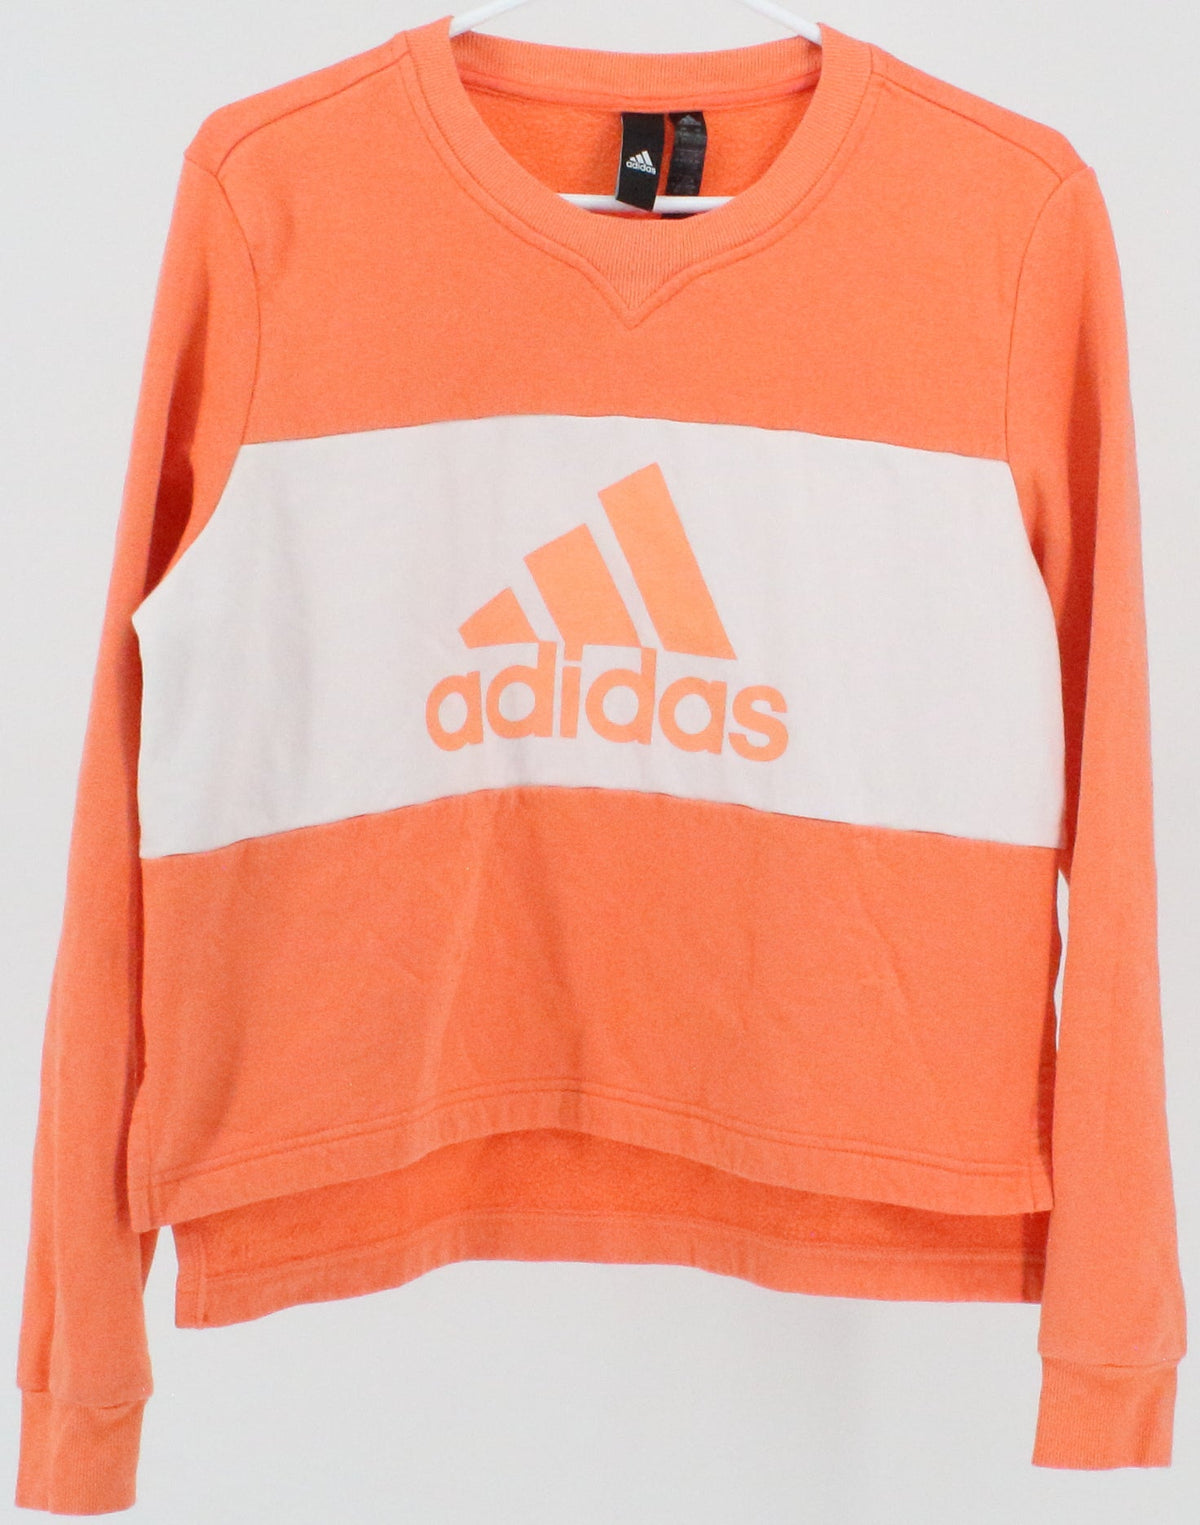 Adidas Orange and White Sweatshirt